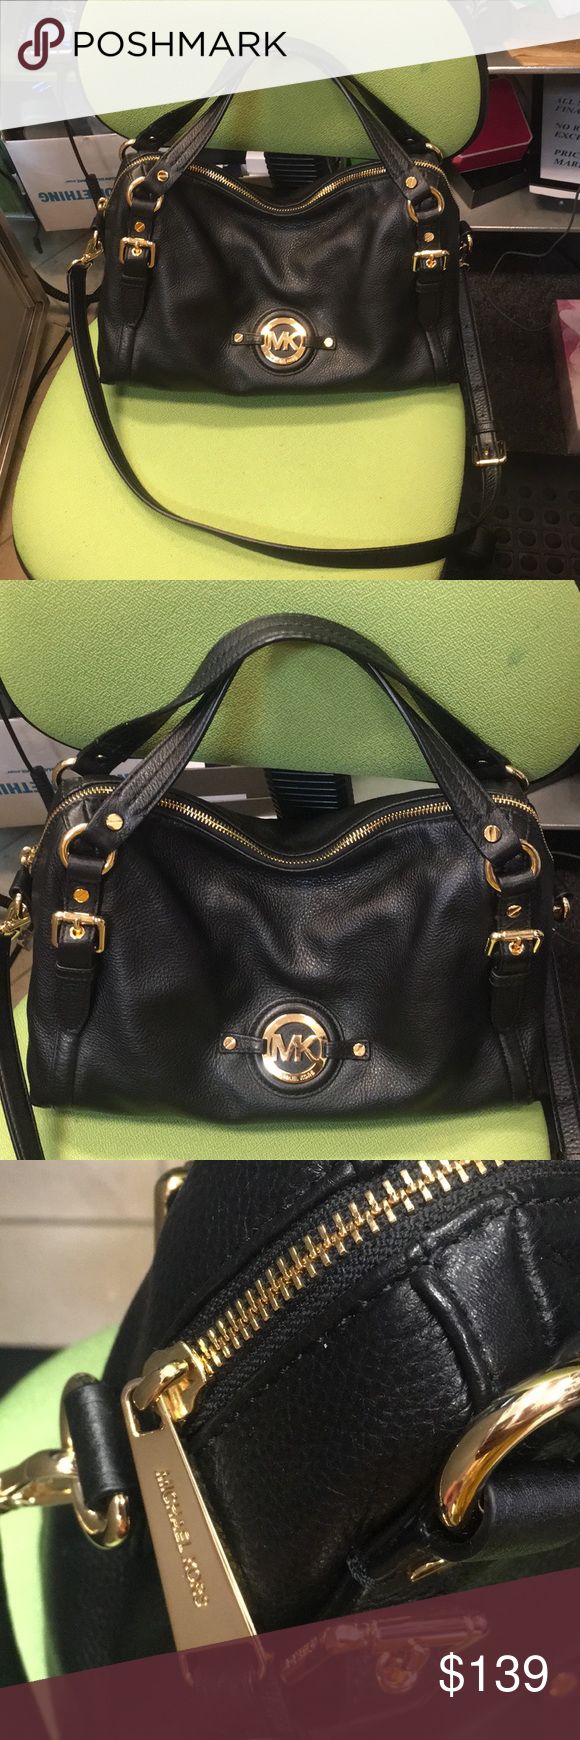 Bags & Handbag Trends : MK handbag Great condition all black leather ...